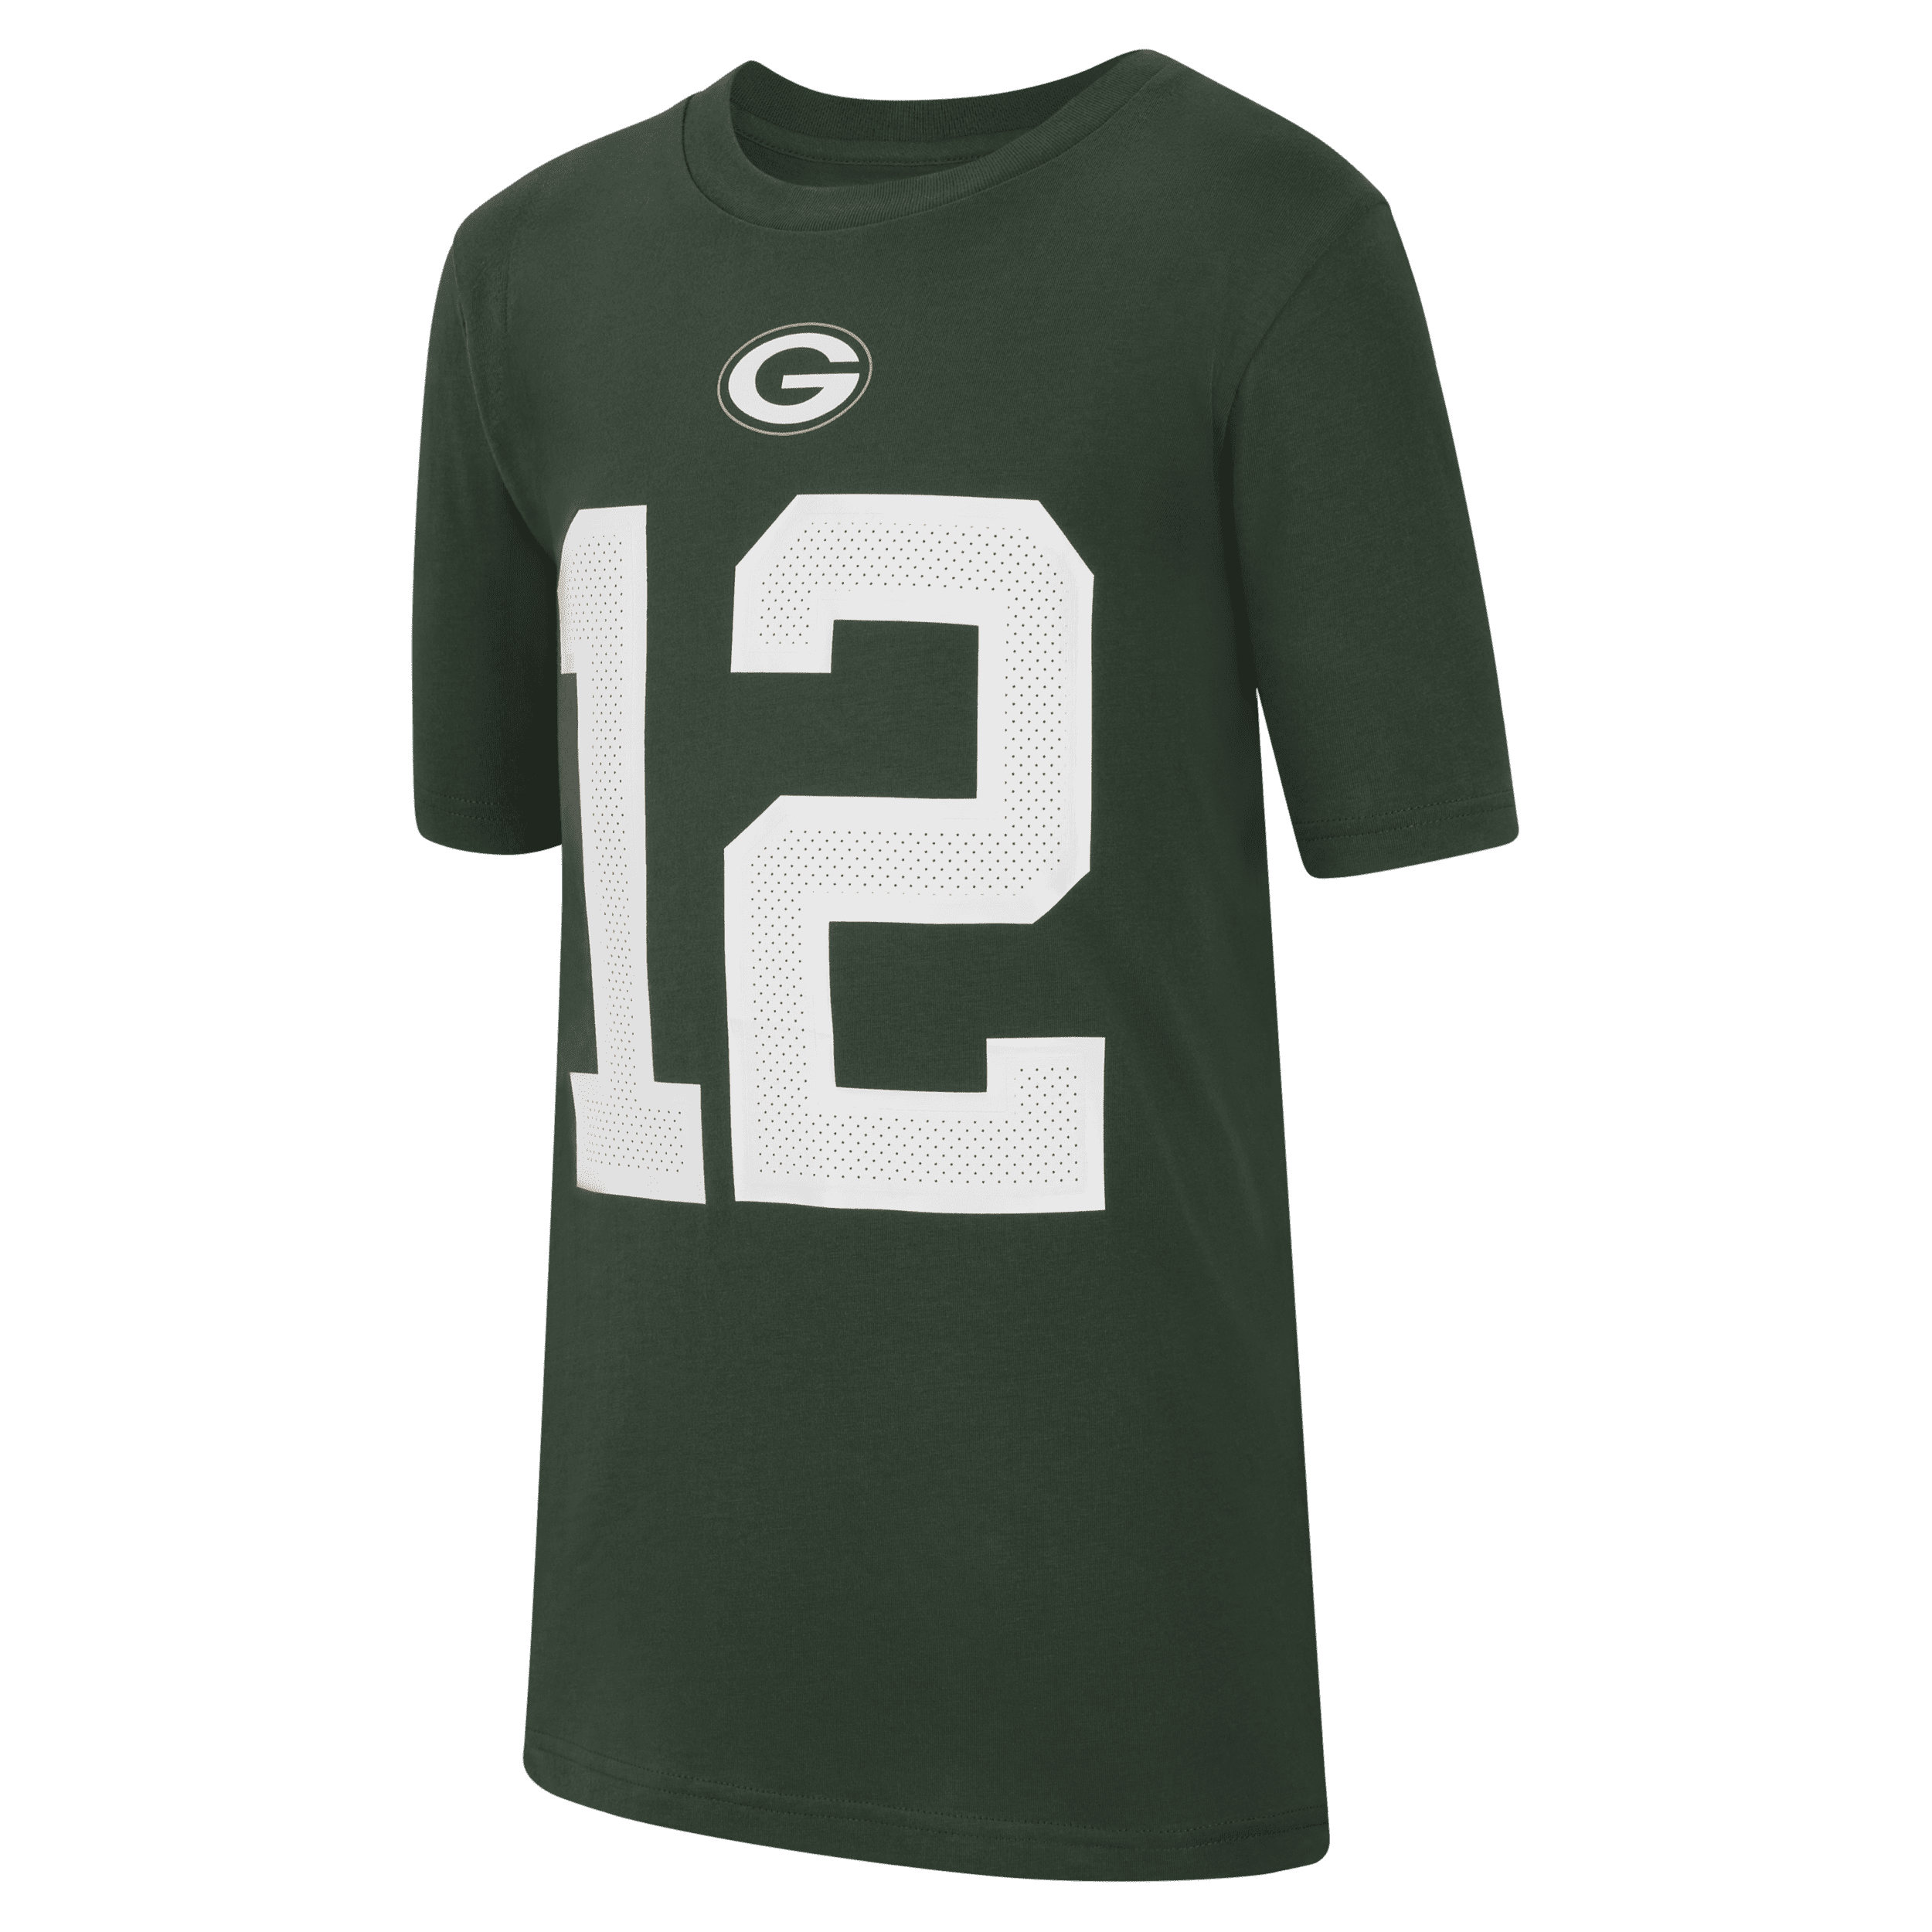 Nike (NFL Green Bay Packers) T-shirt voor kids - Groen